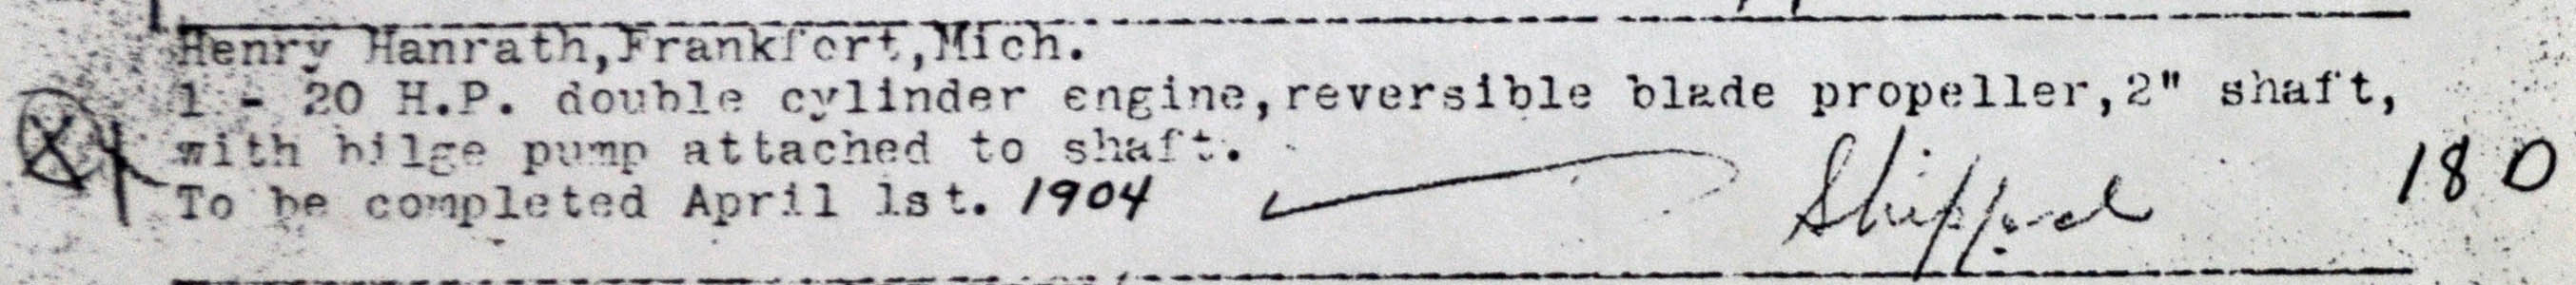 close-up of original 1908 work-order